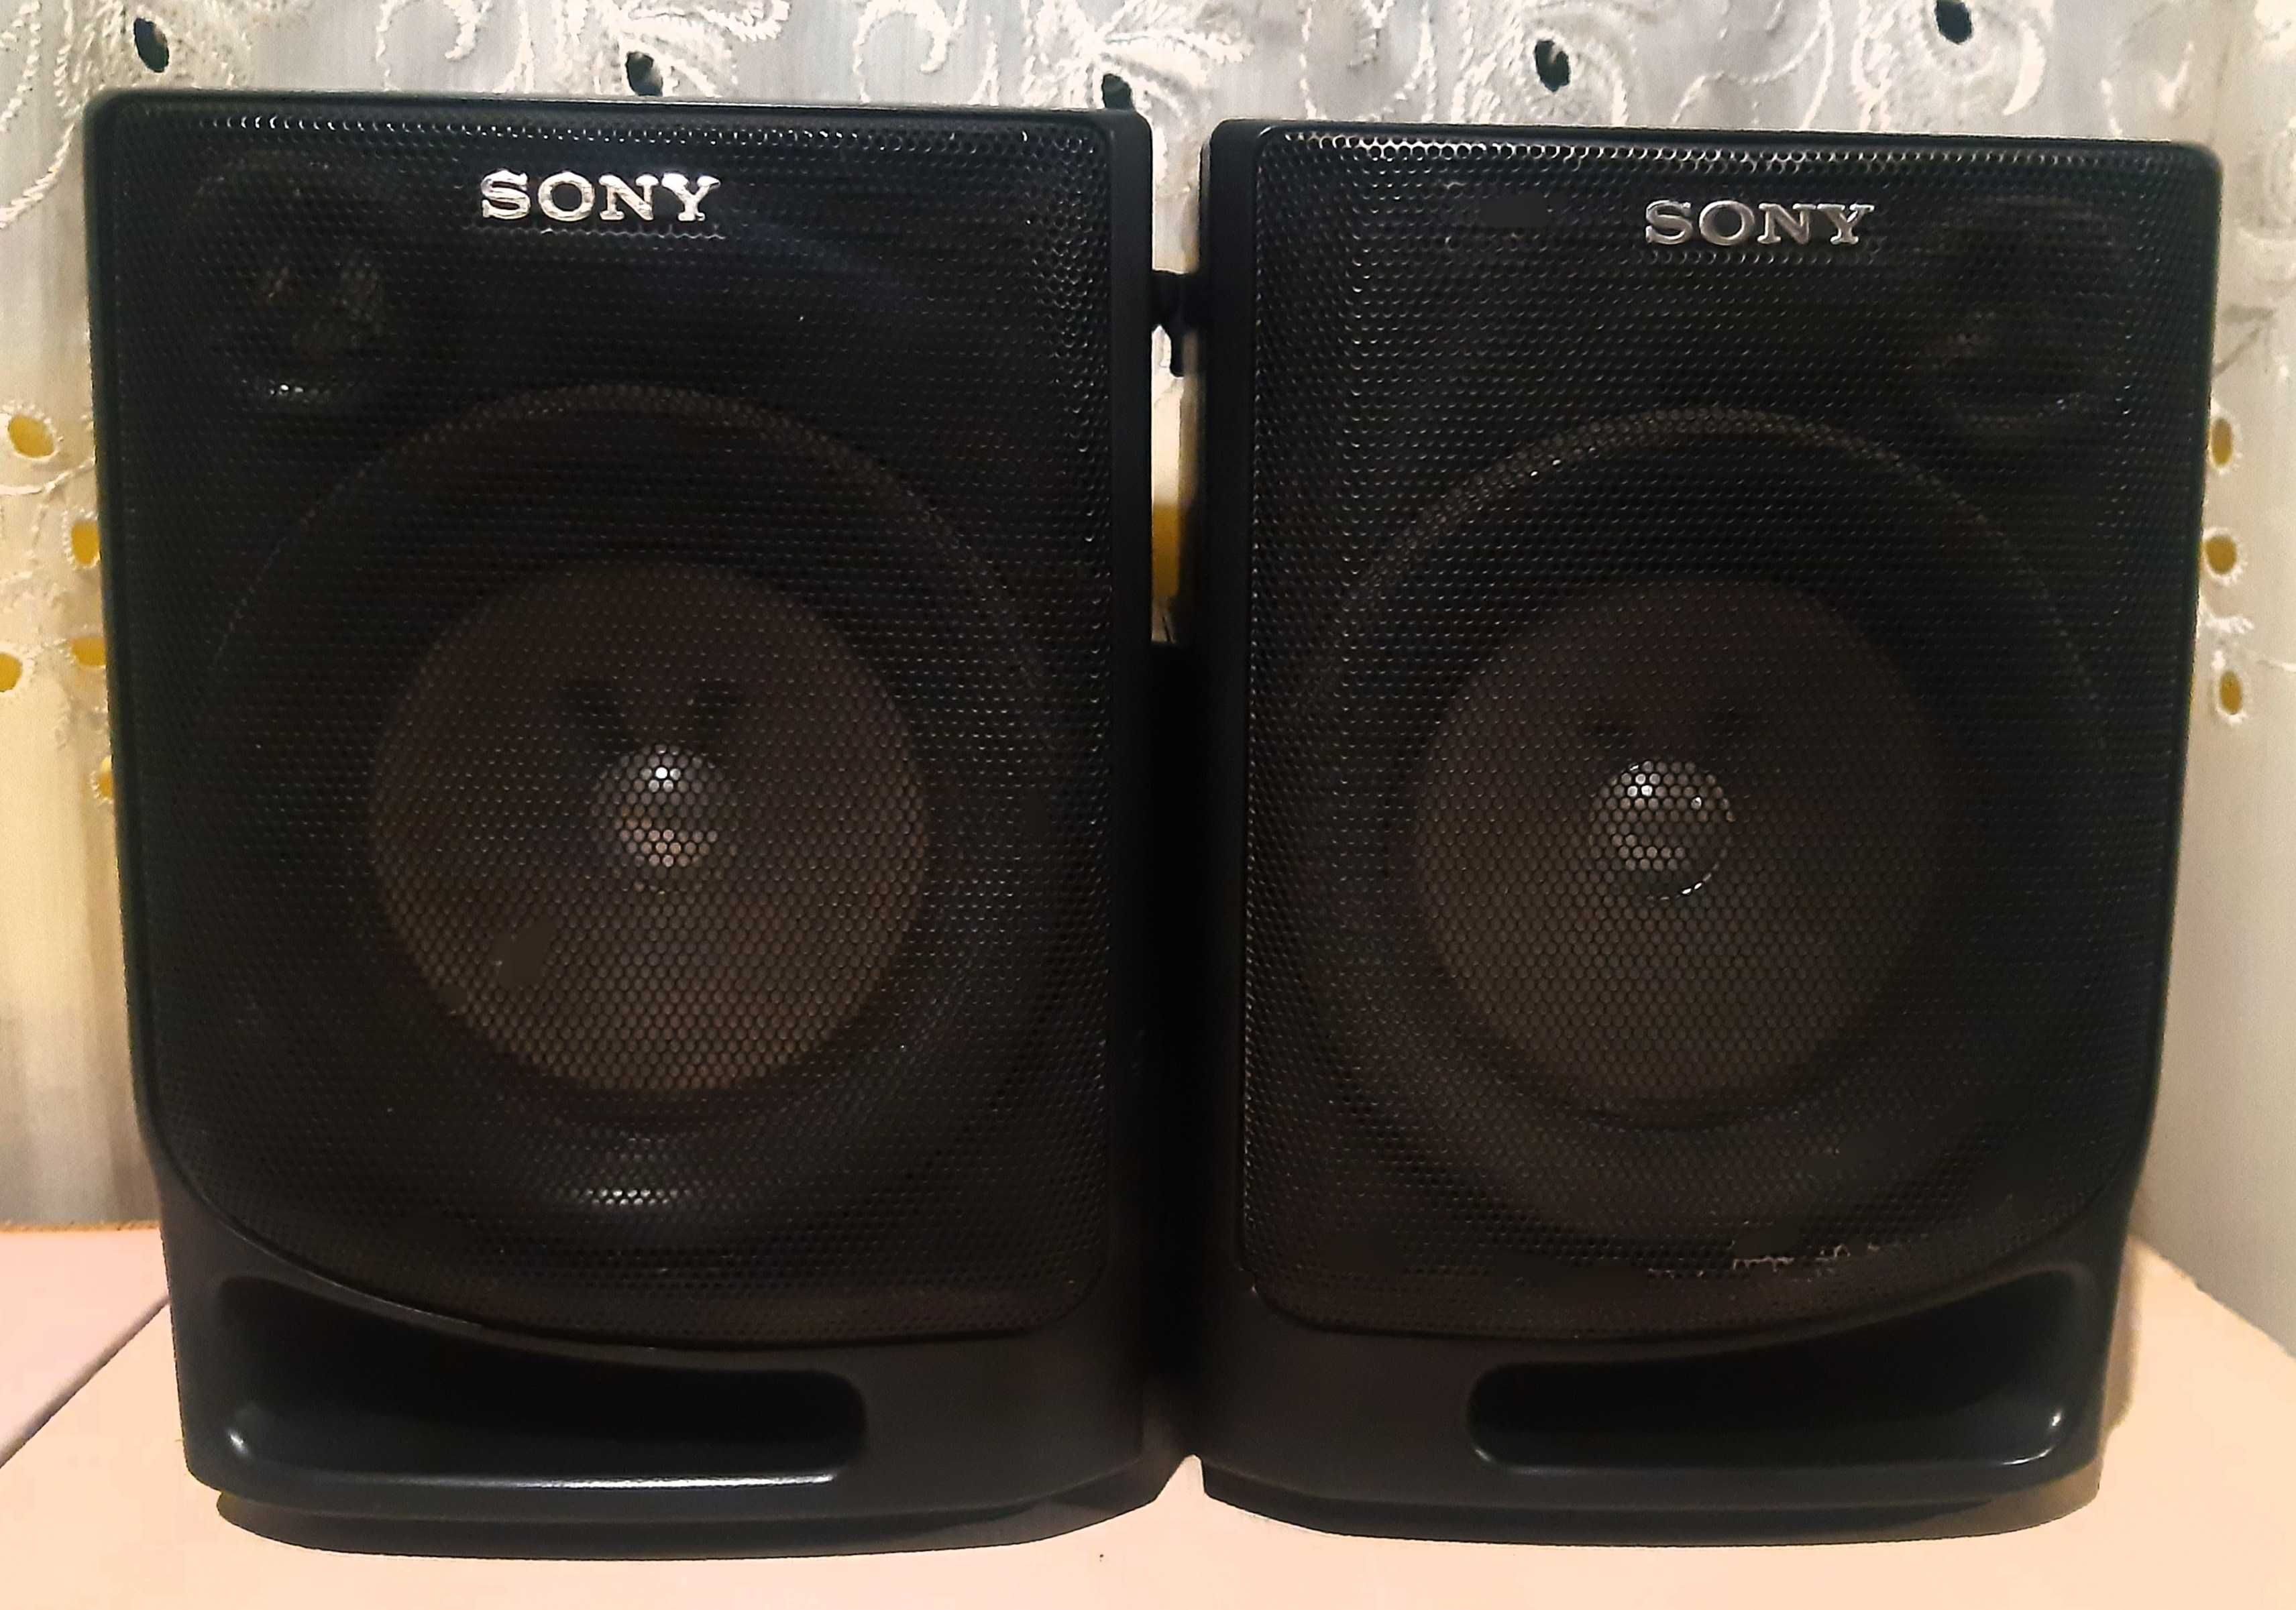 Колонки "SONY" - "Speaker System" рабочие бу